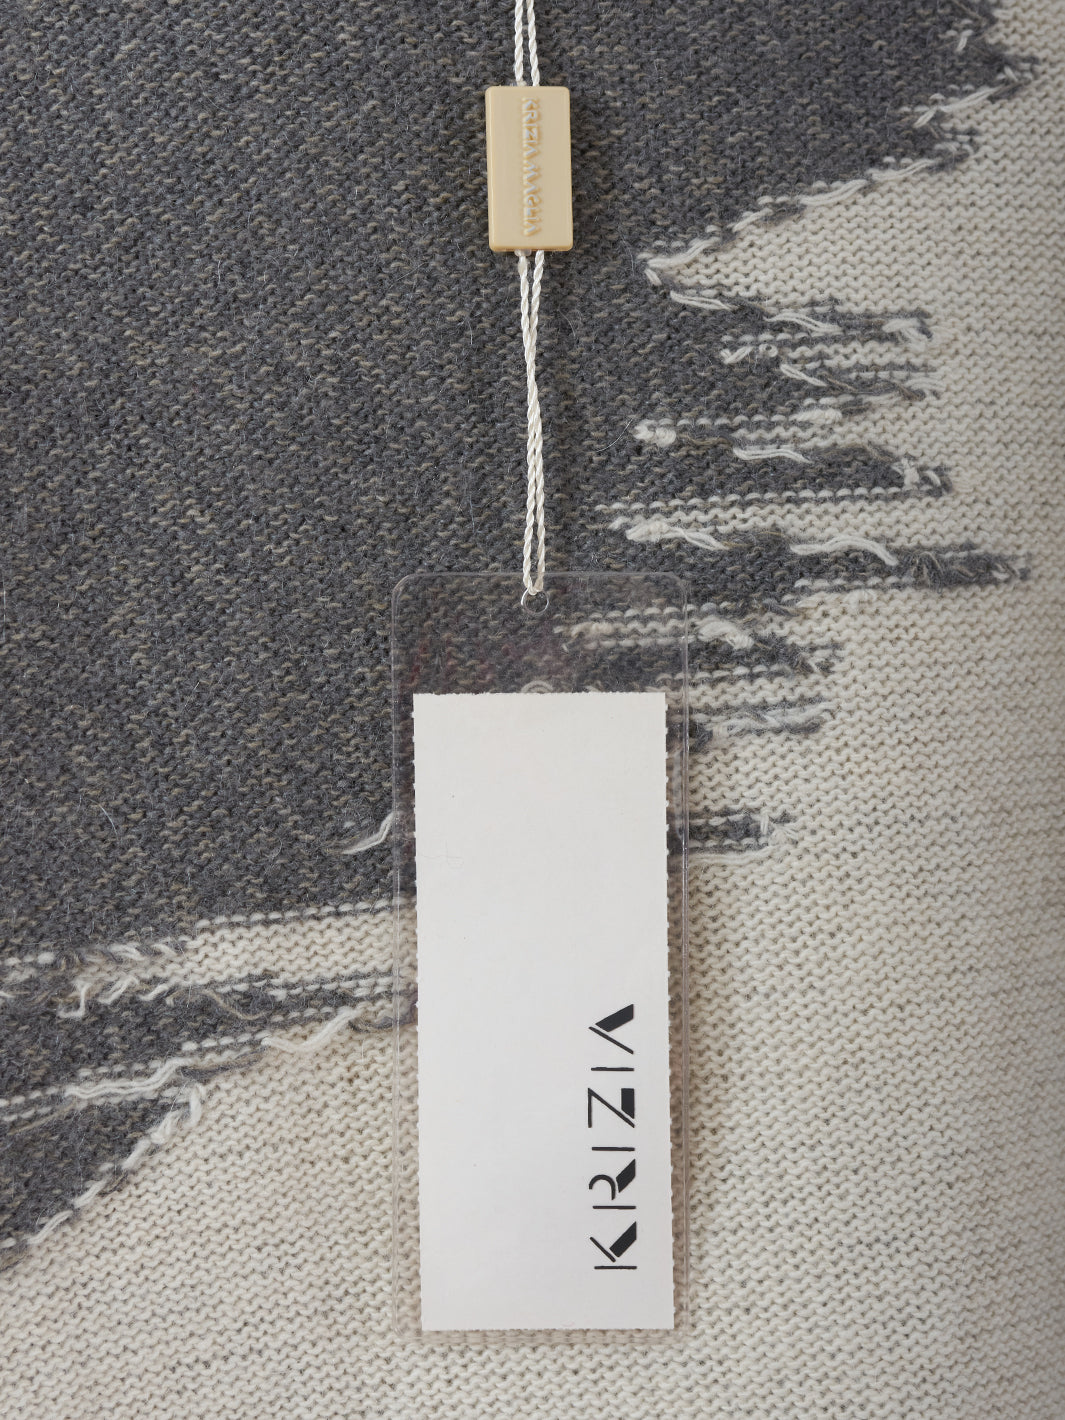 Krizia Grey Melange Hyena Embroidery Sweater